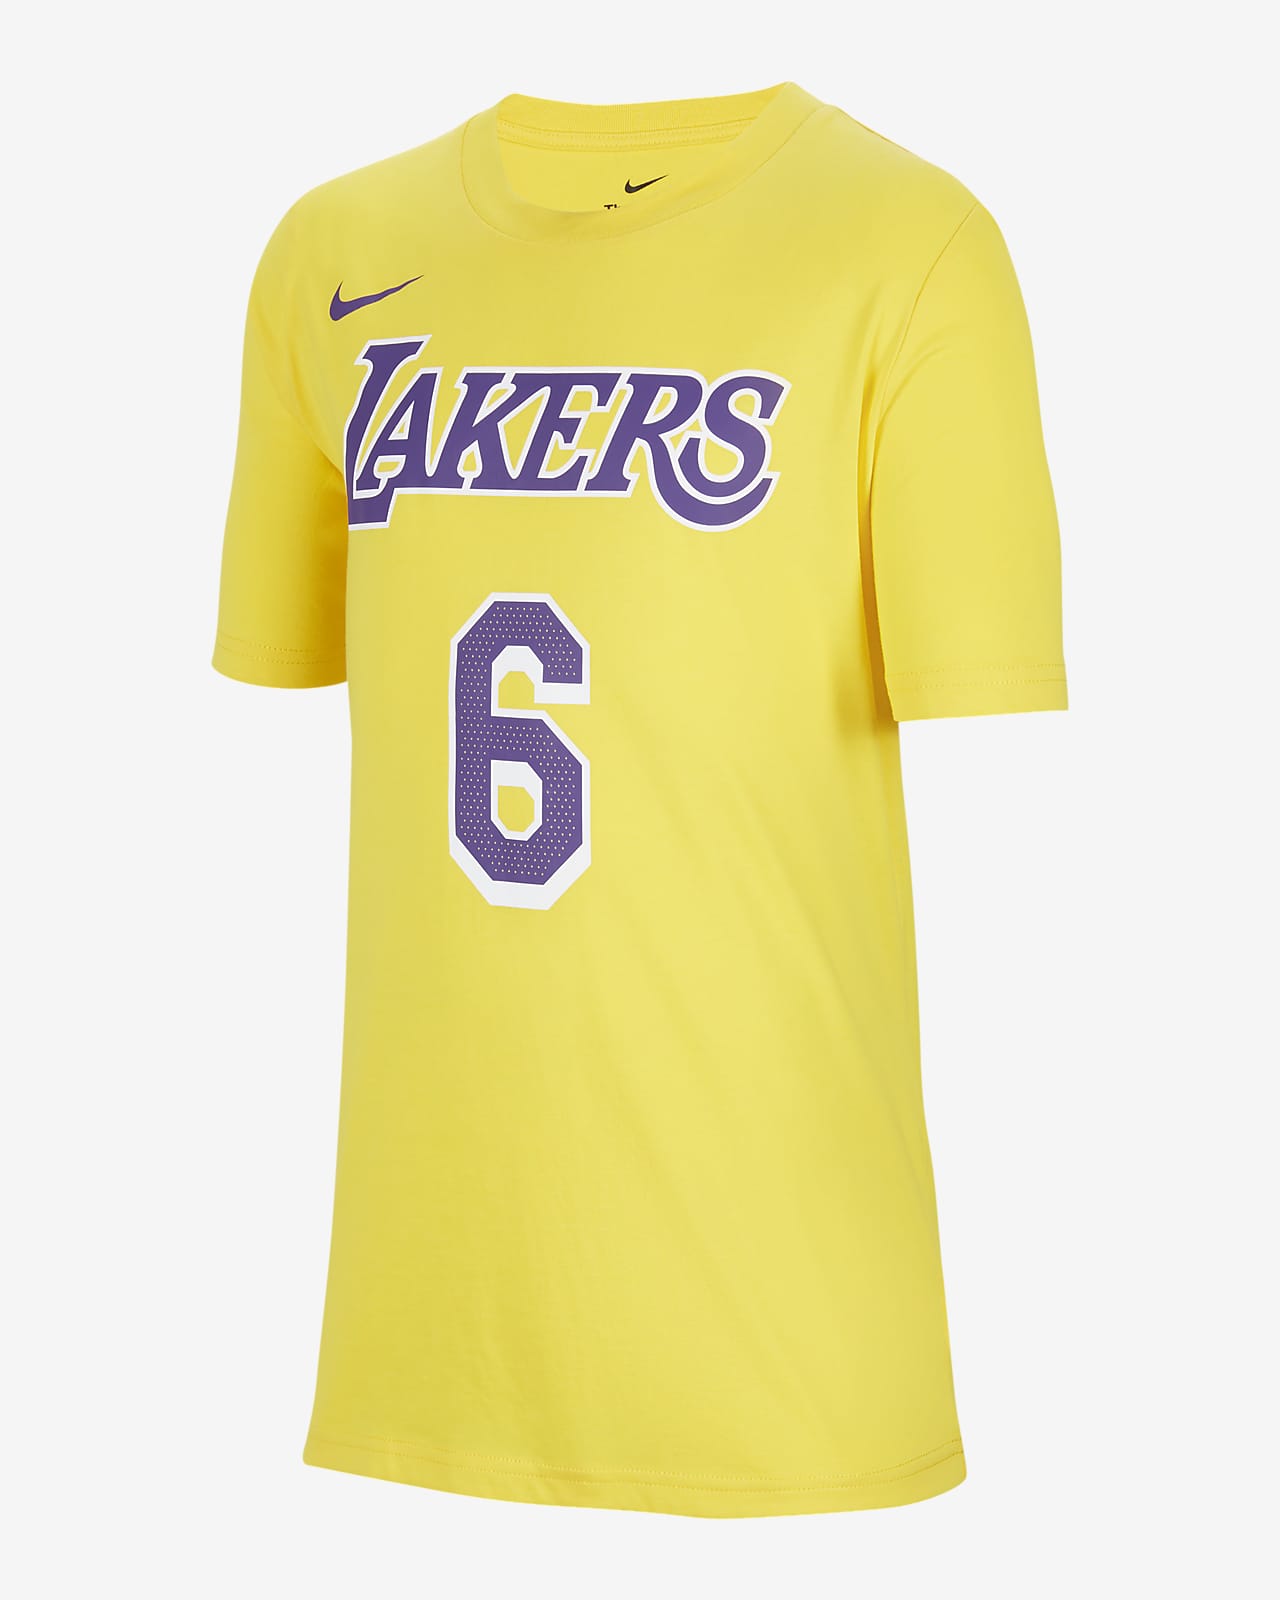 Los Angeles Lakers Nike NBA-T-Shirt für ältere Kinder